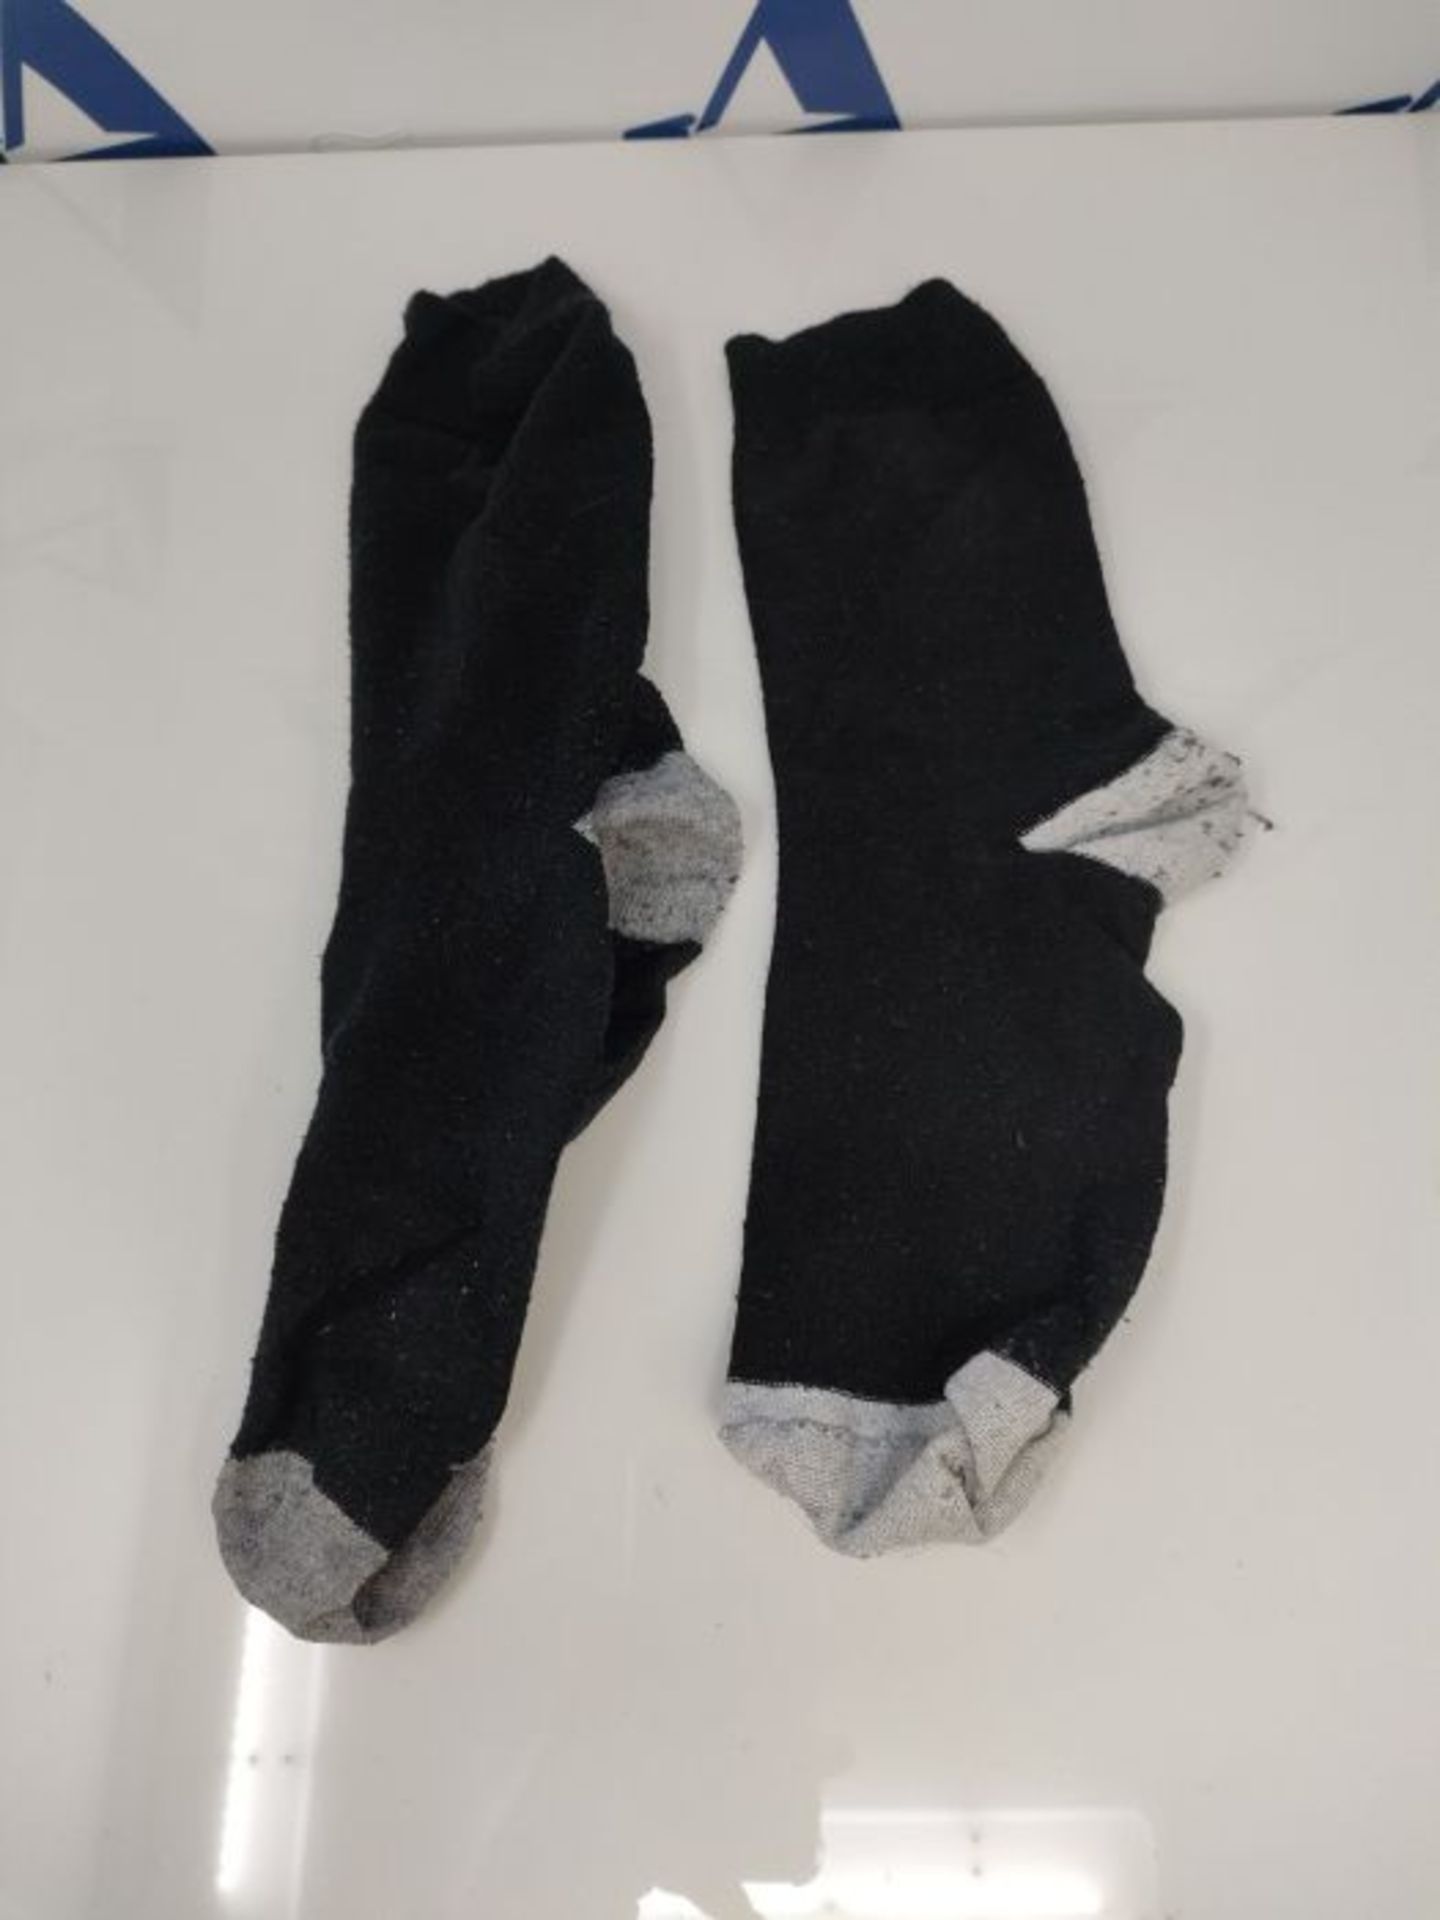 GripGrab Unisex's Merino Wool Lightweight SL Soft Breathable Cycling Socks Everyday-Li - Image 2 of 2